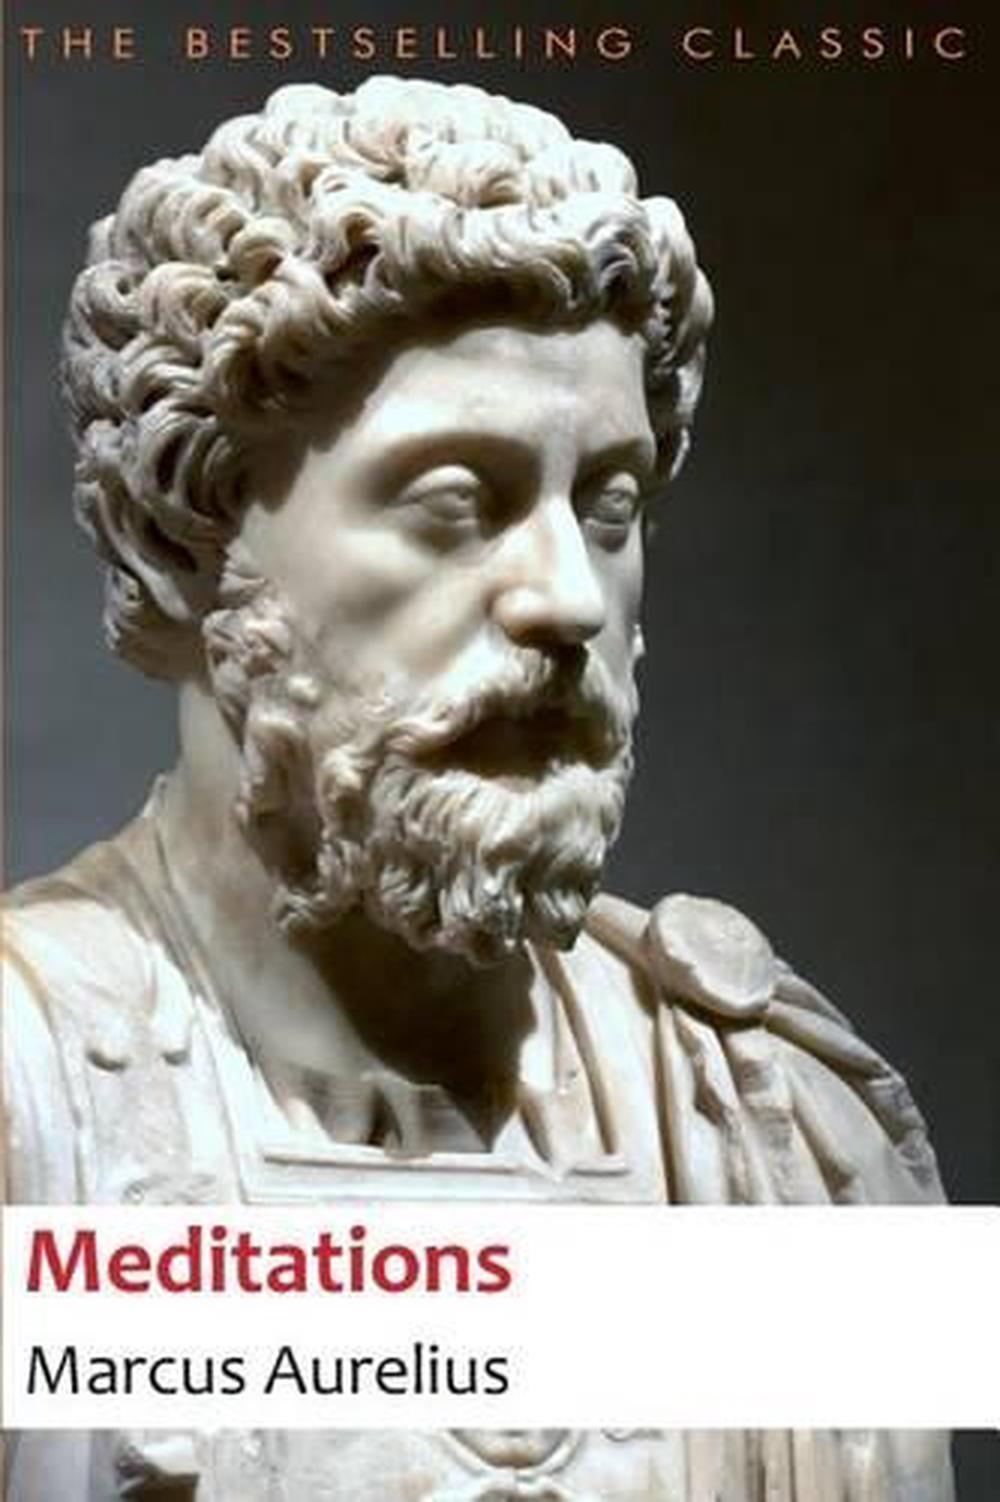 Meditaciones by Marcus Aurelius